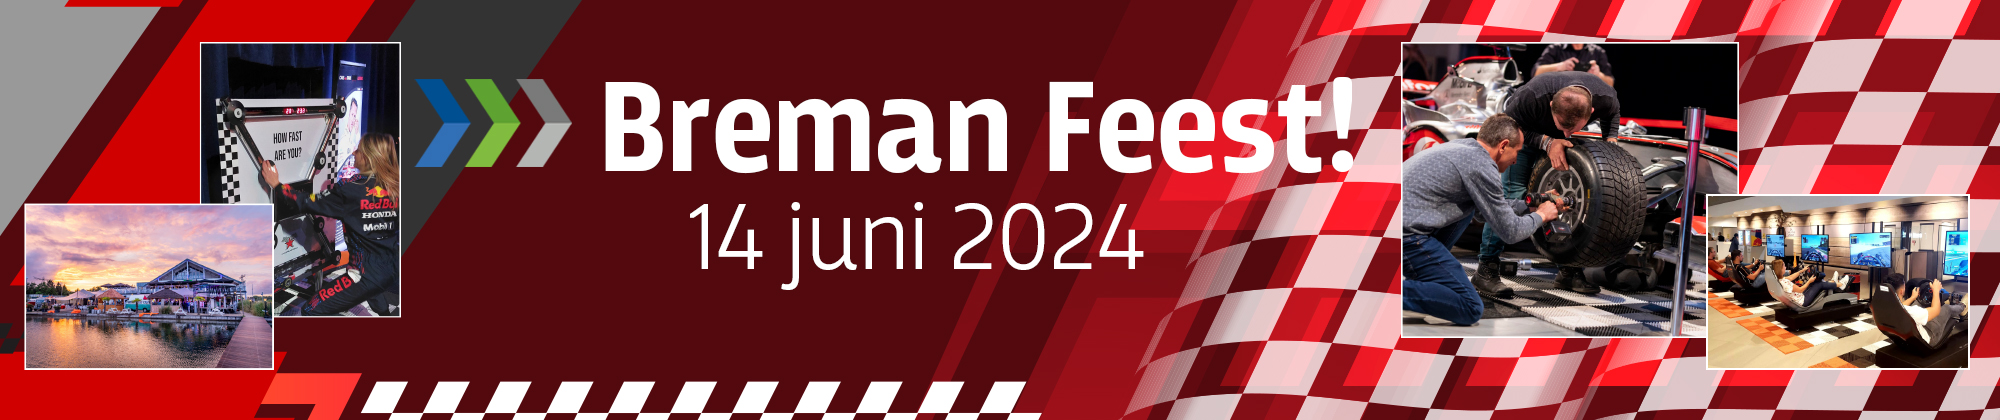 Header Breman Feest! 2024